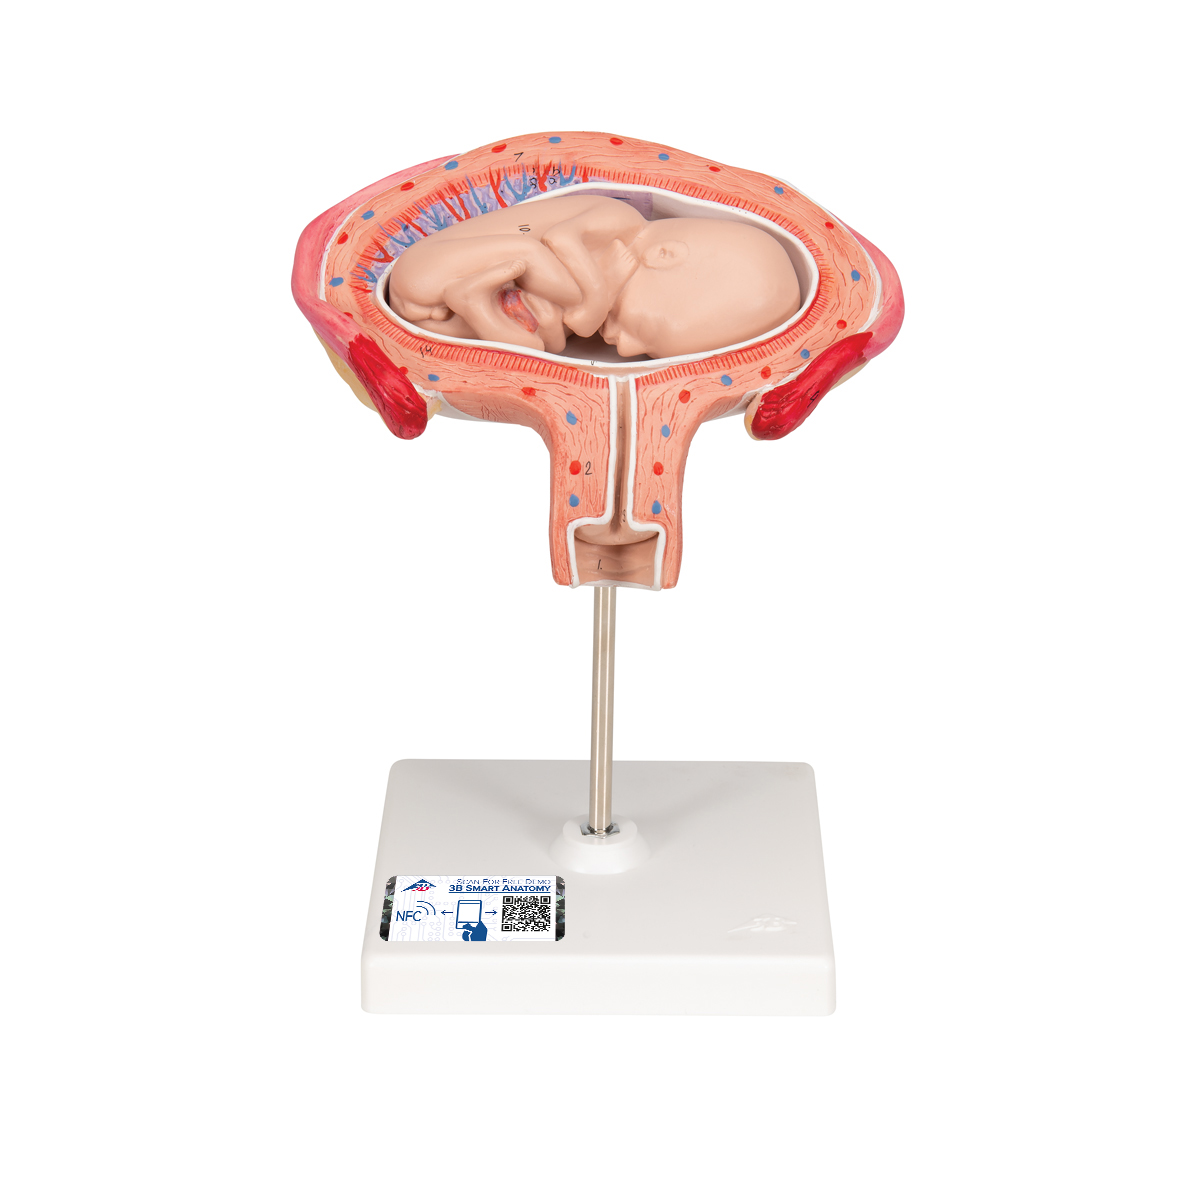 Fetus Modell, 4. Monat, Bauchlage - 3B Smart Anatomy, Bestellnummer 1018626, L10/4, 3B Scientific